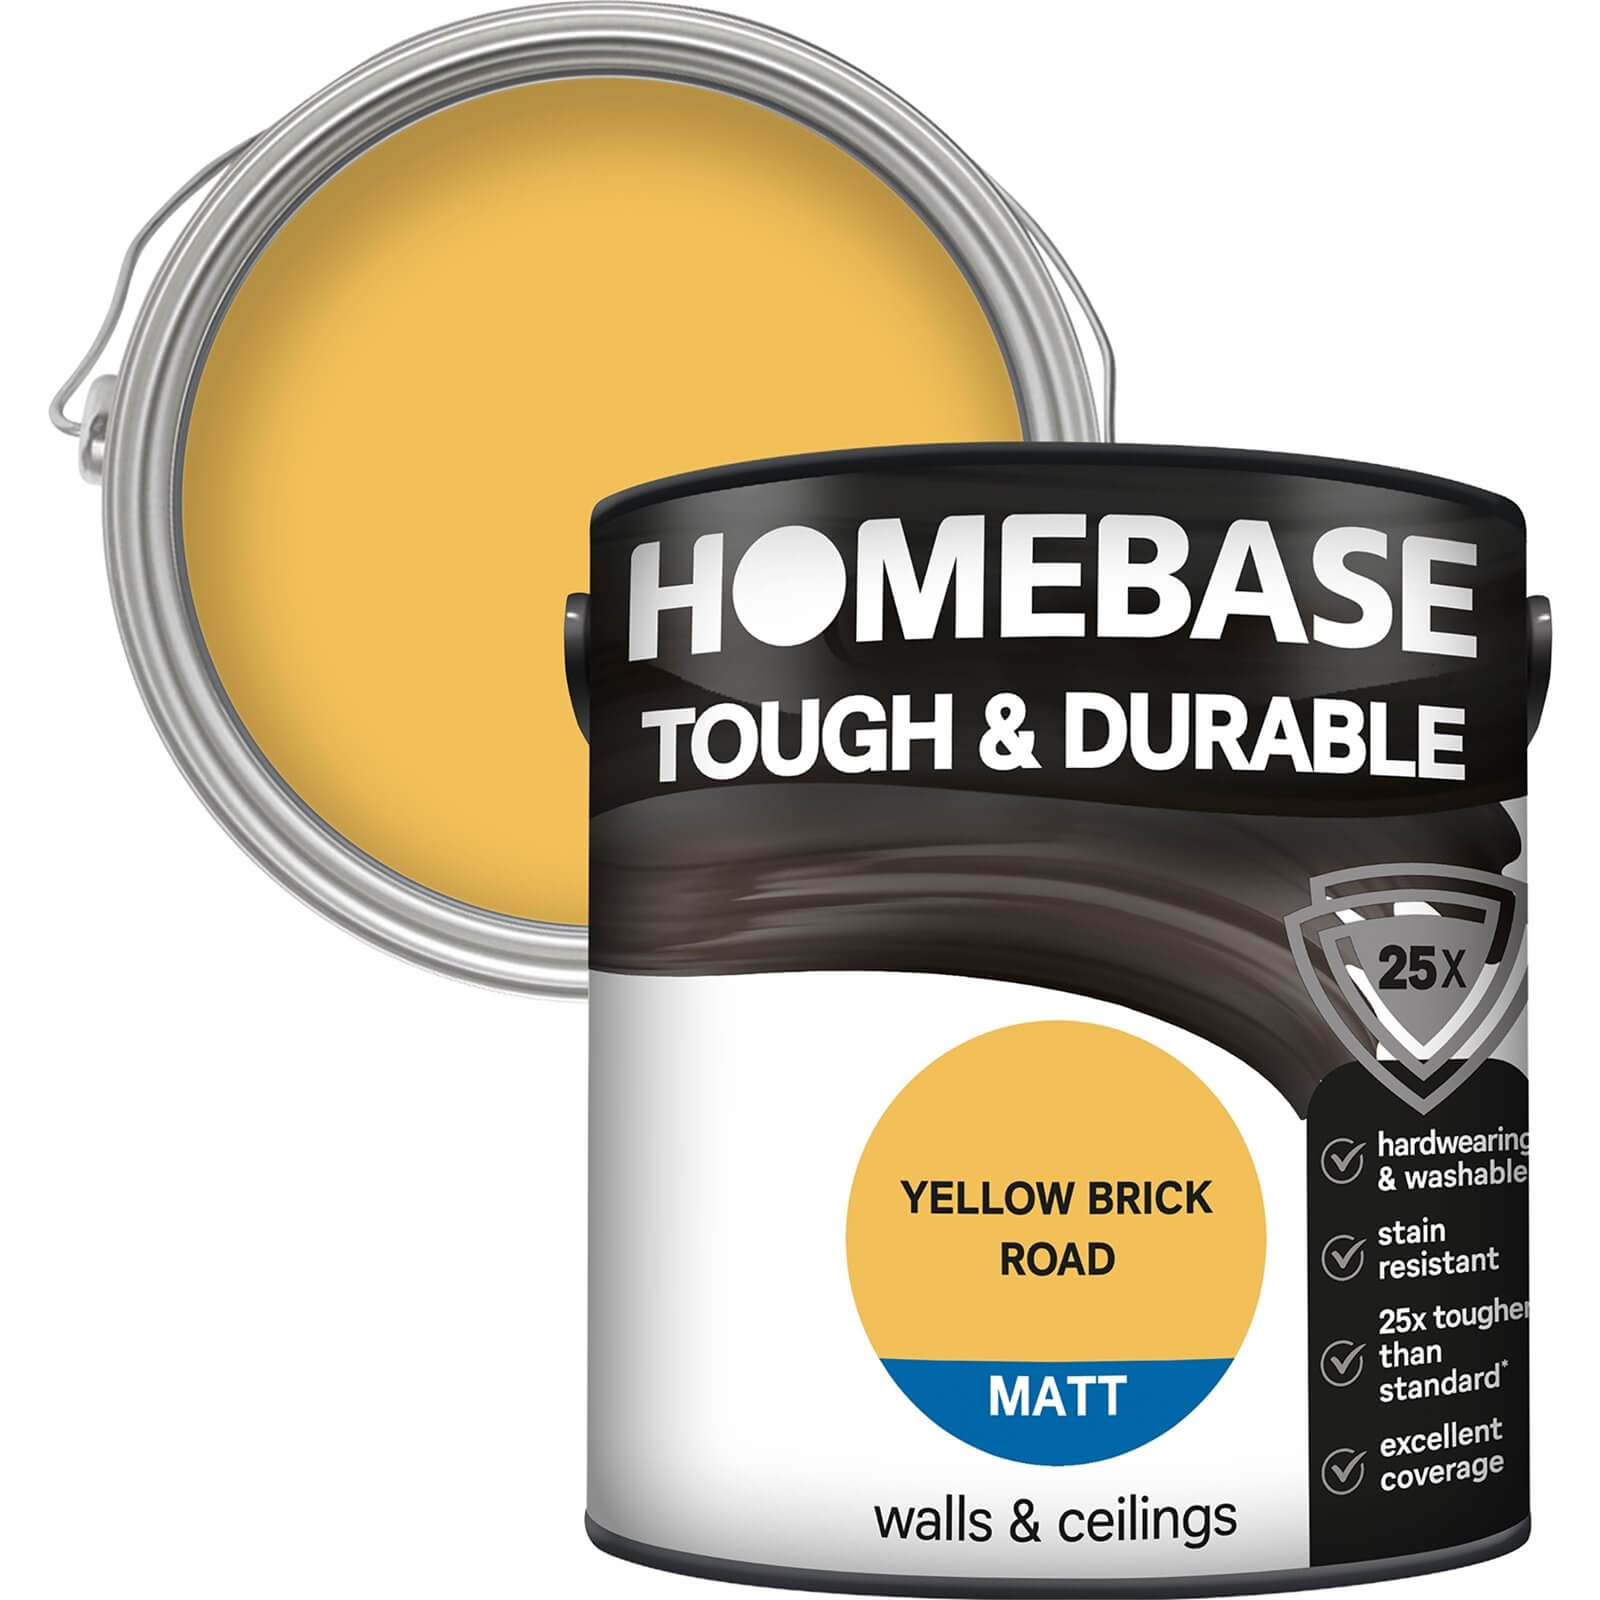 Homebase Tough & Durable Matt Paint Yellow Brick Road - 2.5L